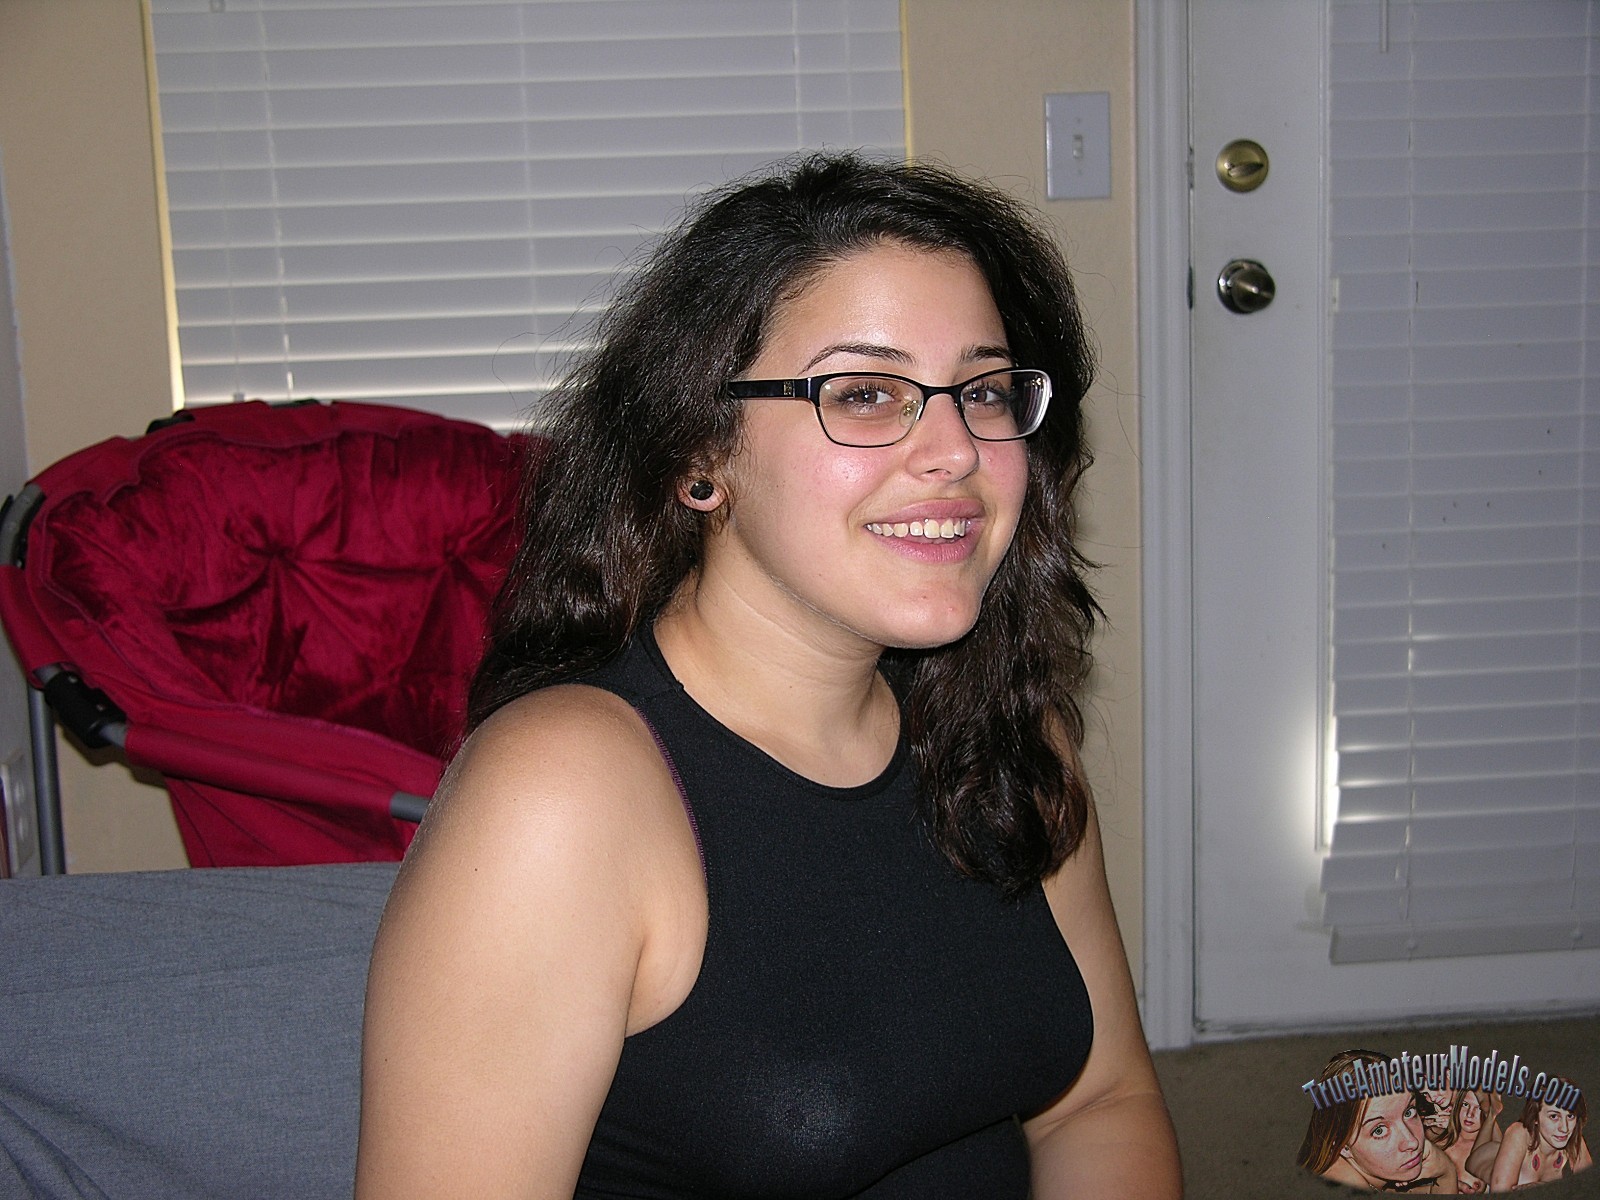 xpics - sex in glasses Glasses wearing amateur brunette teen models nude 